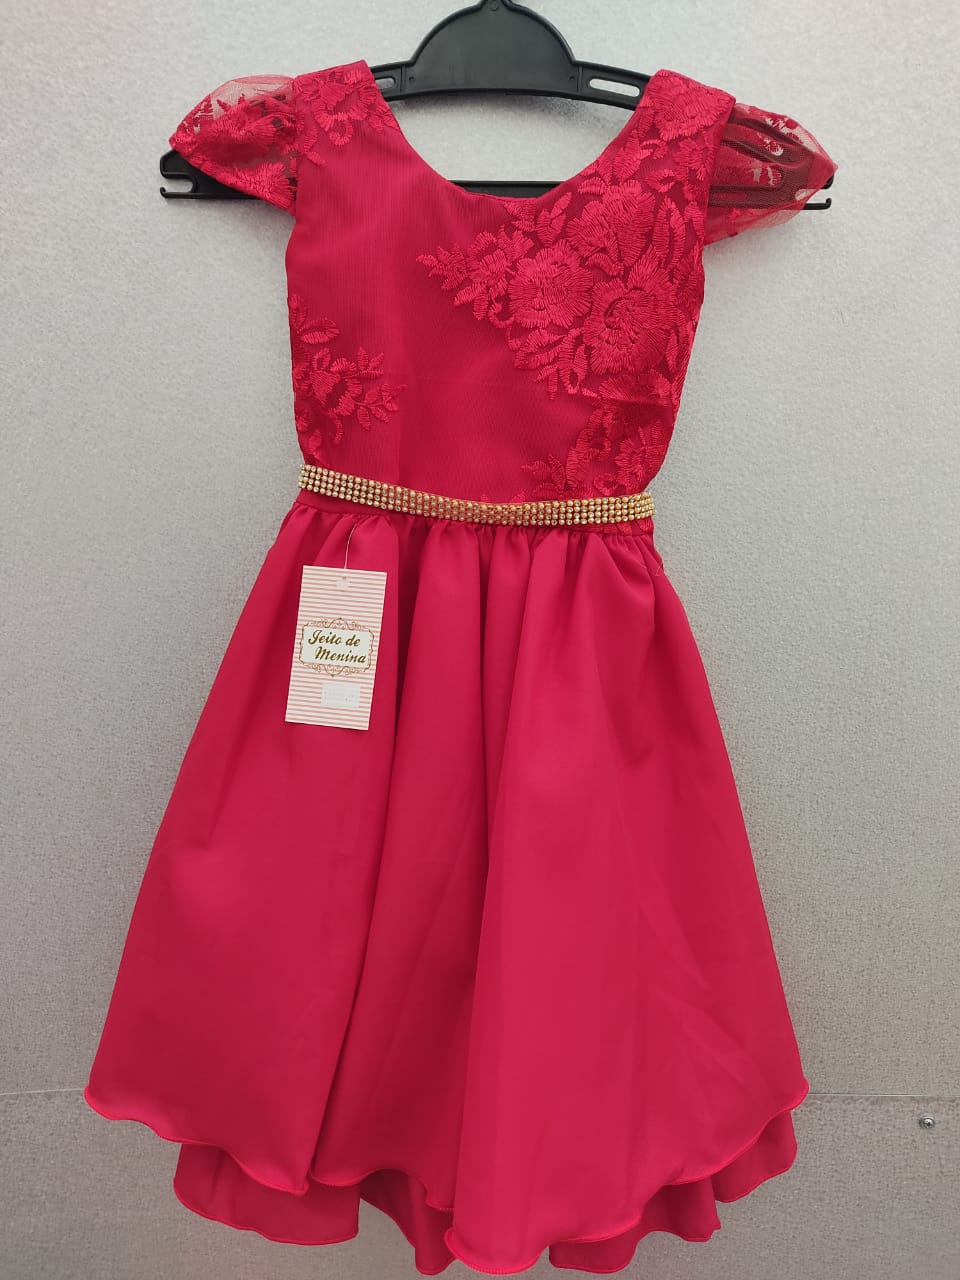 Vestido Infantil Vermelho Rendado Cinto Strass Luxo